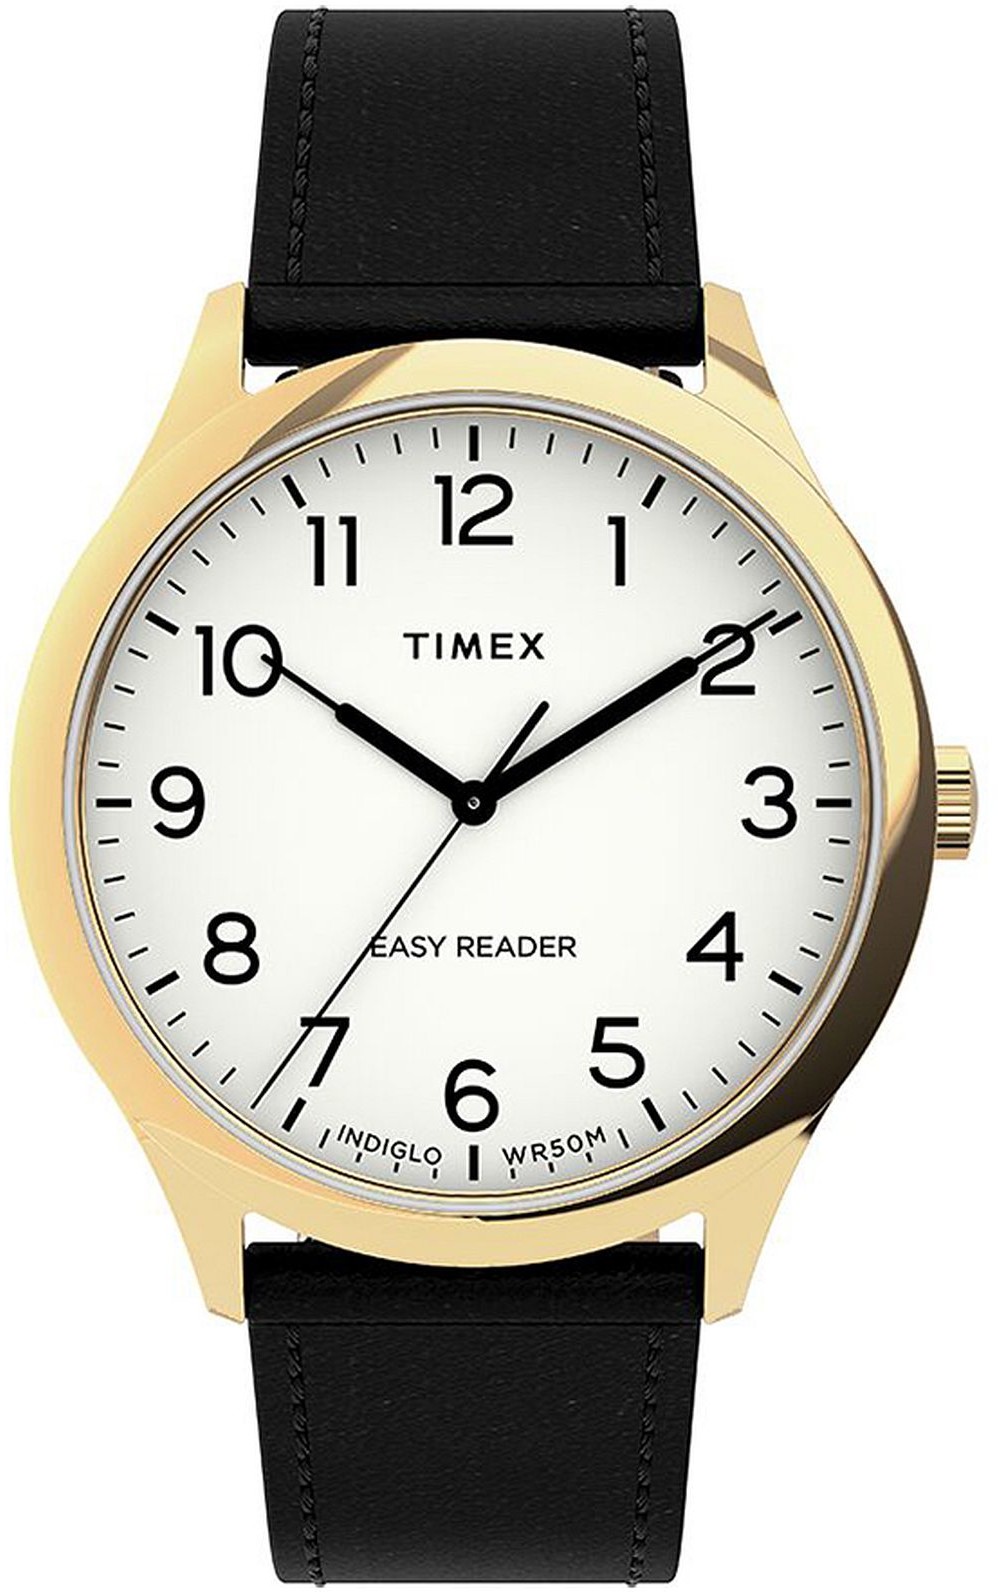 Timex TW2U22200